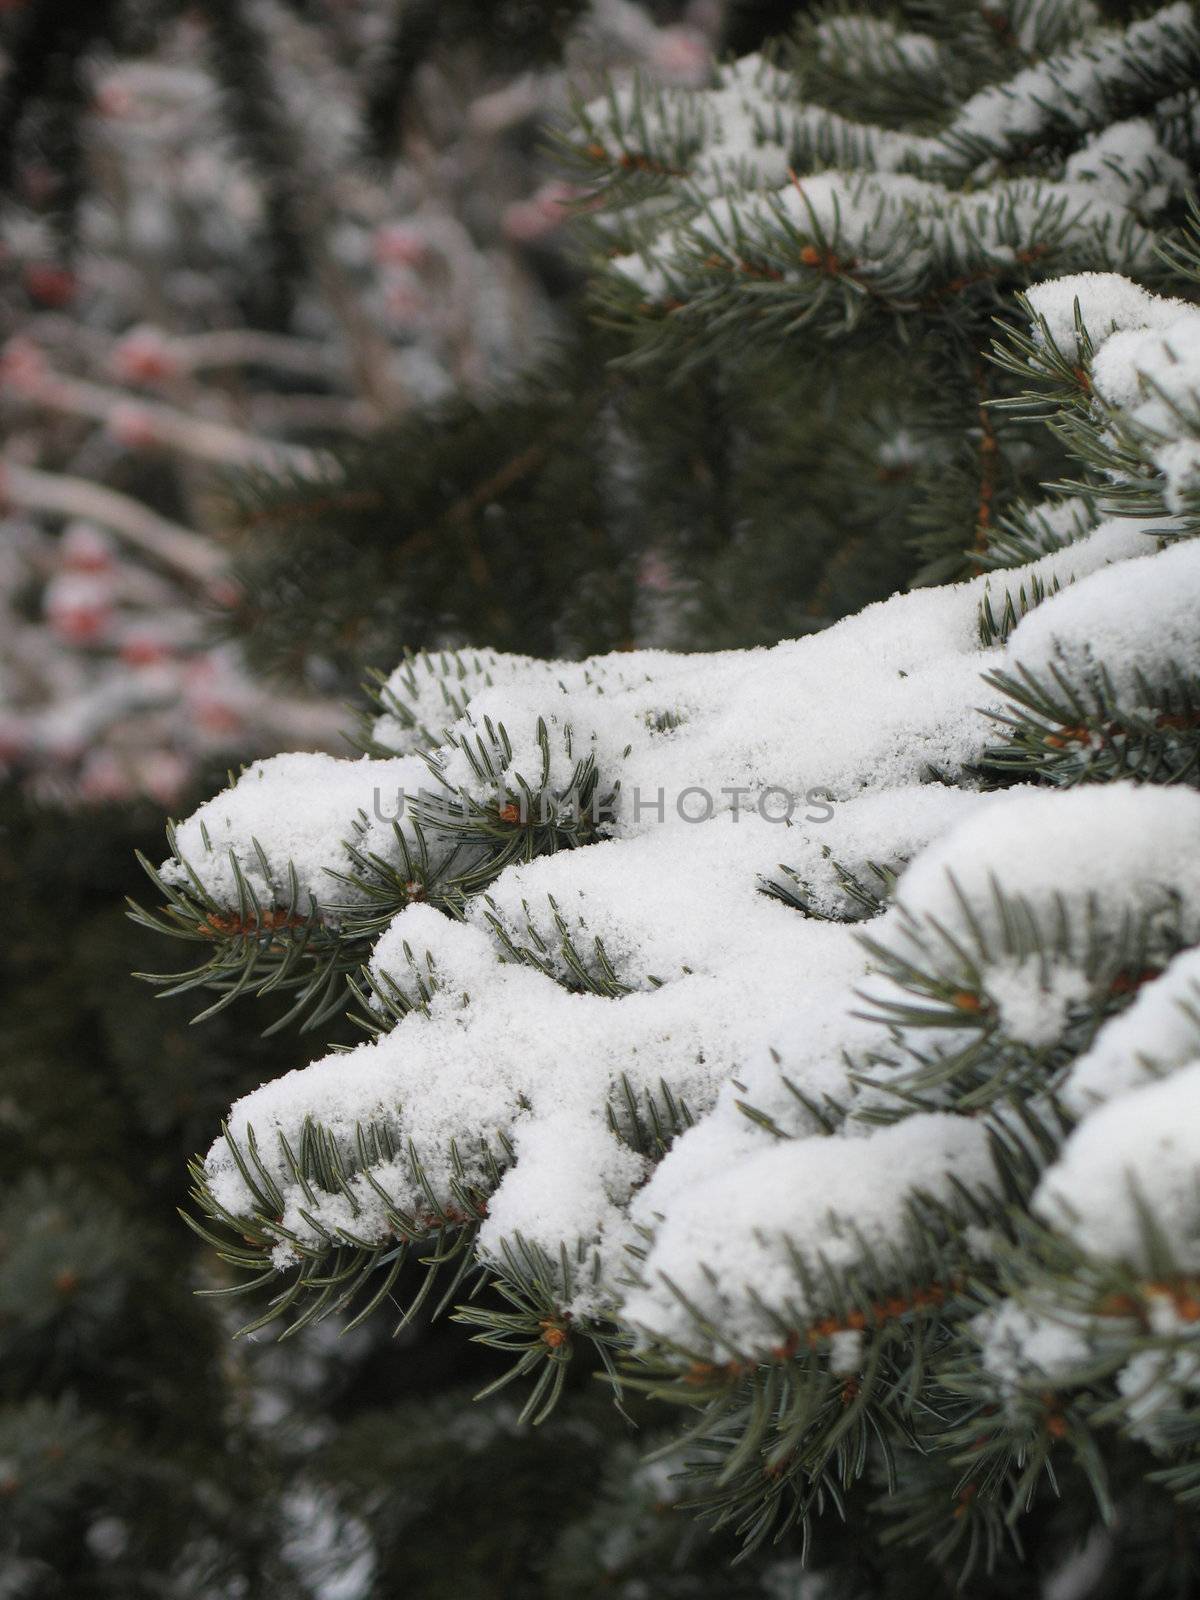 snow on a tree